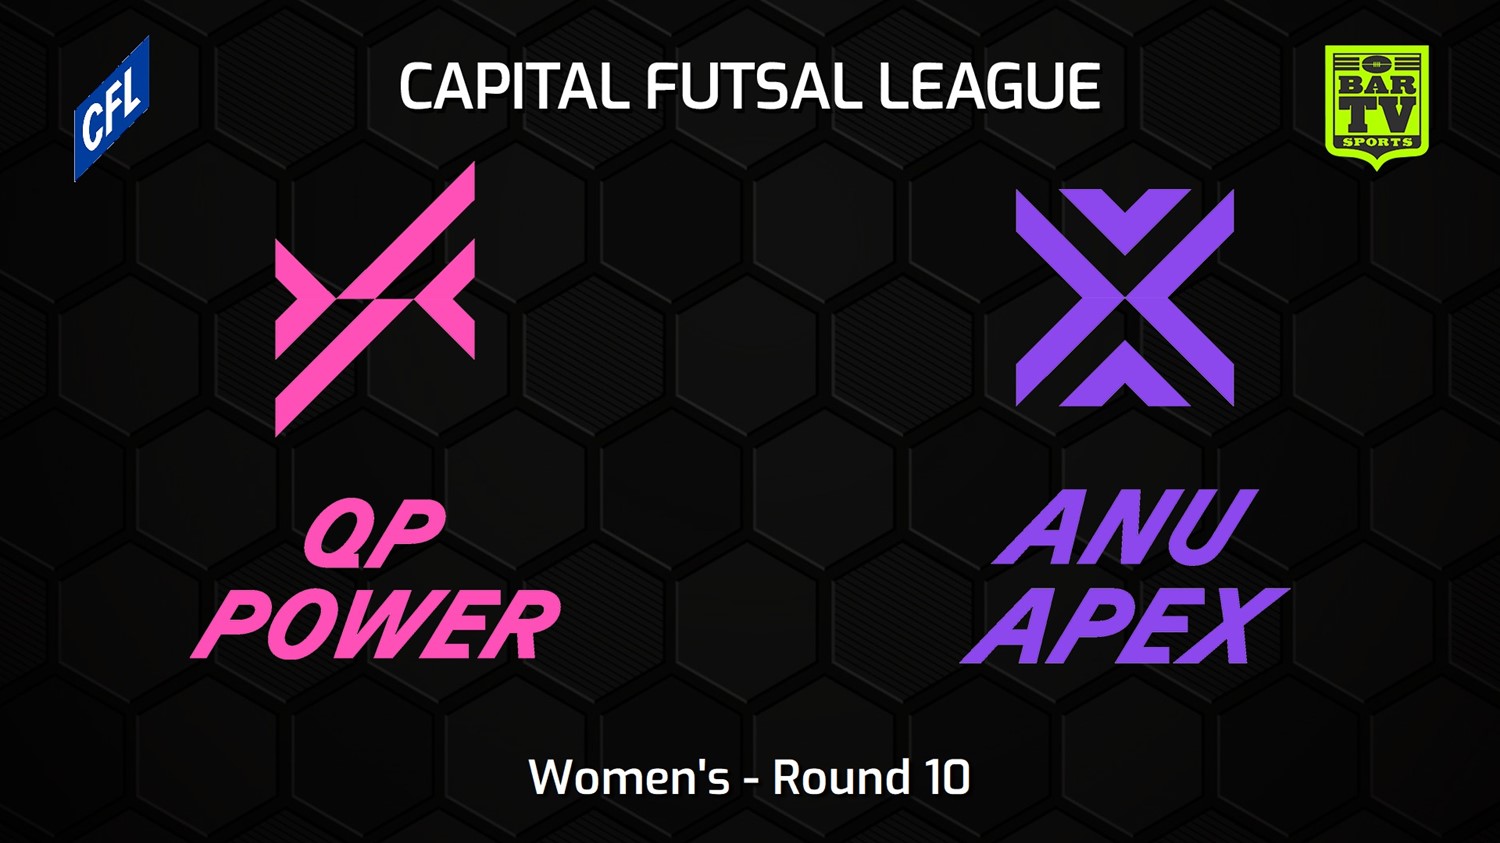 230203-Capital Football Futsal Round 10 - Women's - Queanbeyan-Palerang Power v ANU Apex Minigame Slate Image